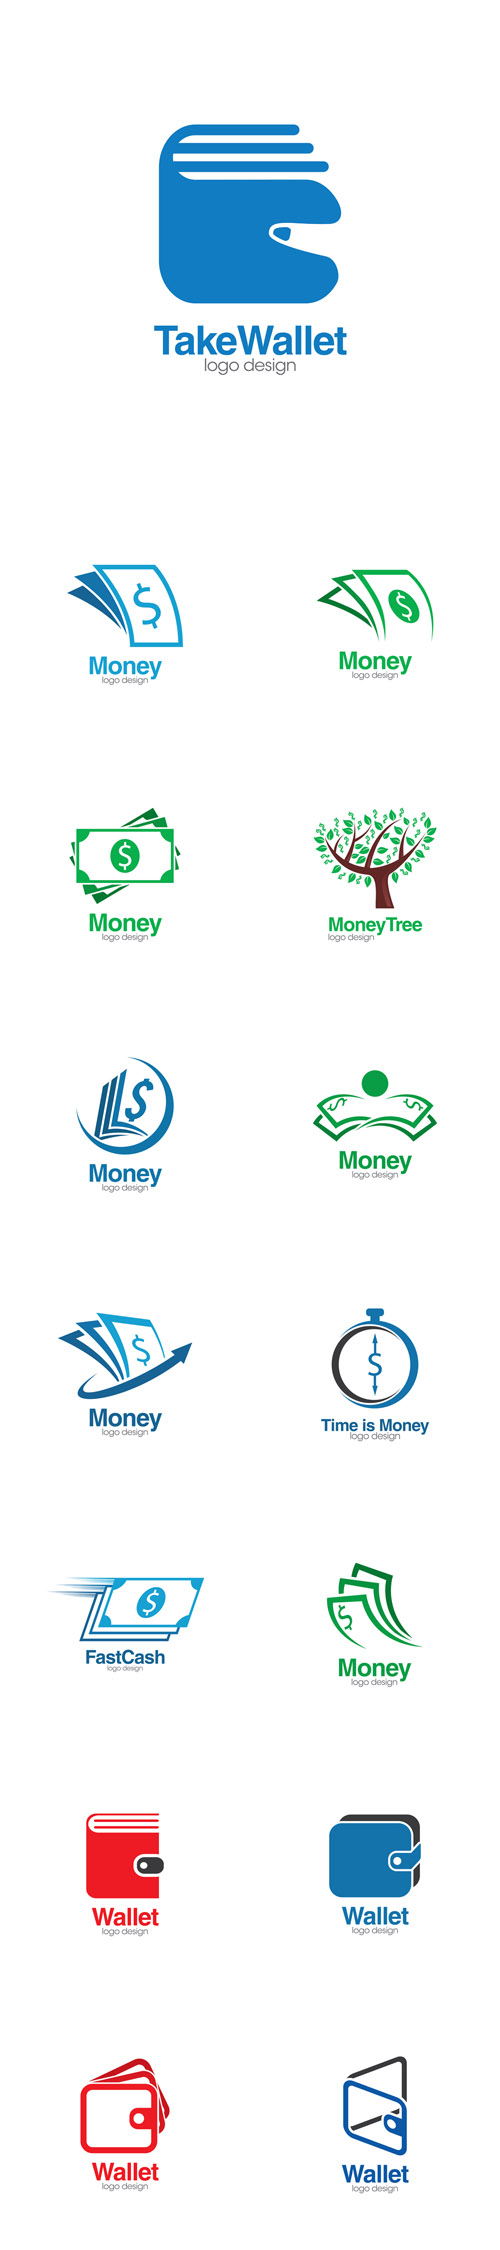 Vectors - Wallet and Money Creative Concept Logo Design Templates